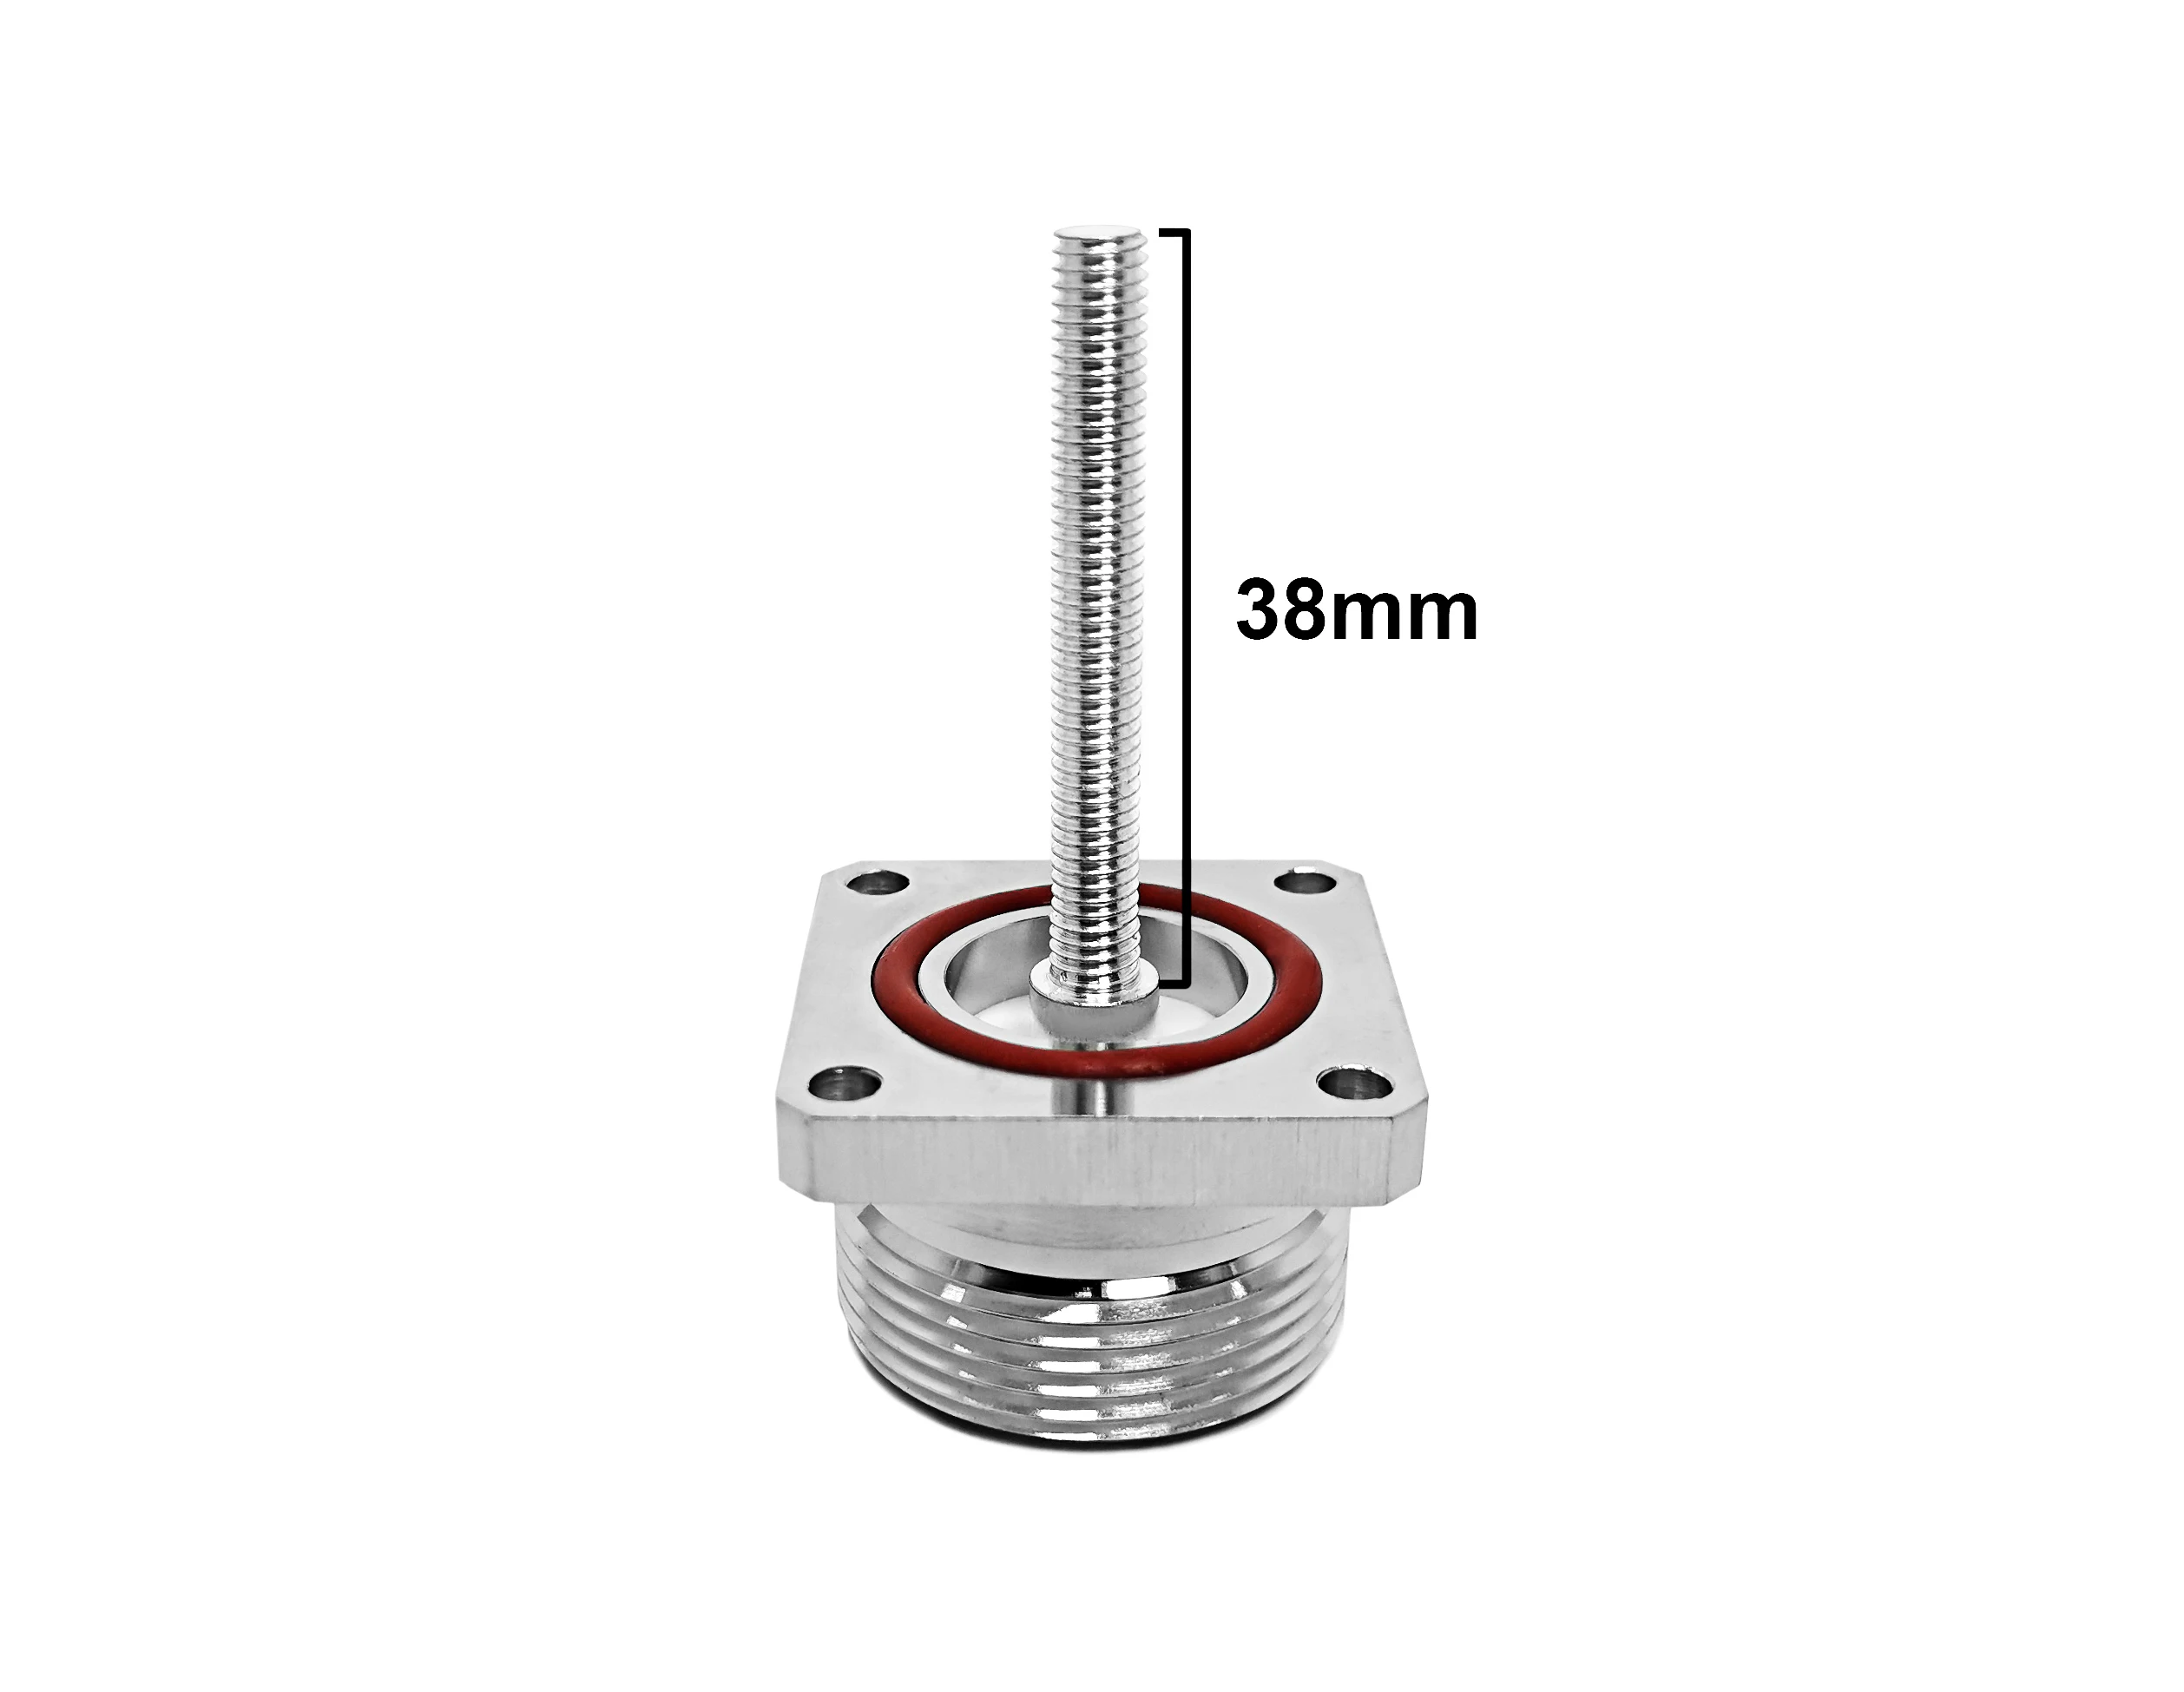 Din 7/16 L29  female jack M5 screw thread length 38mm rf coaxial connector details